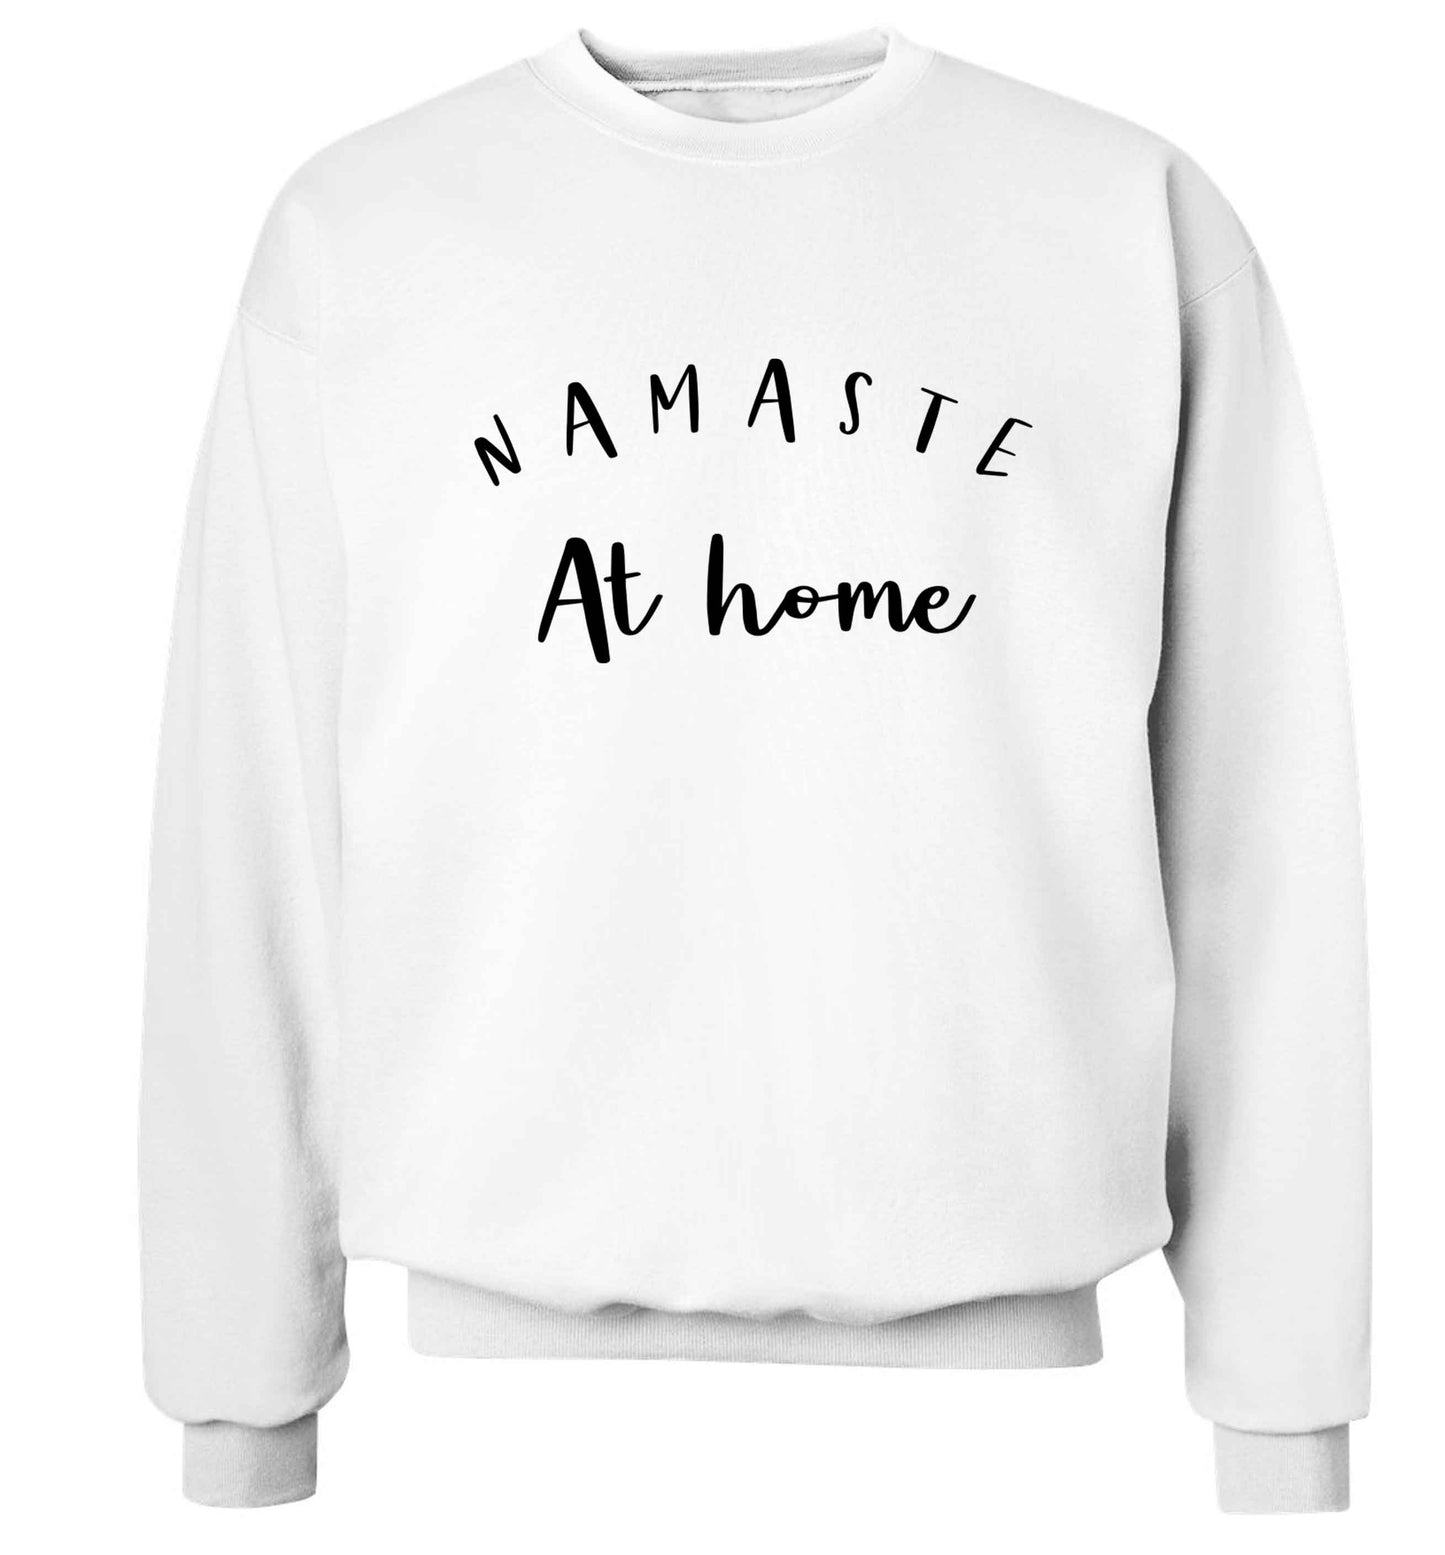 Namaste at home Adult's unisex white Sweater 2XL